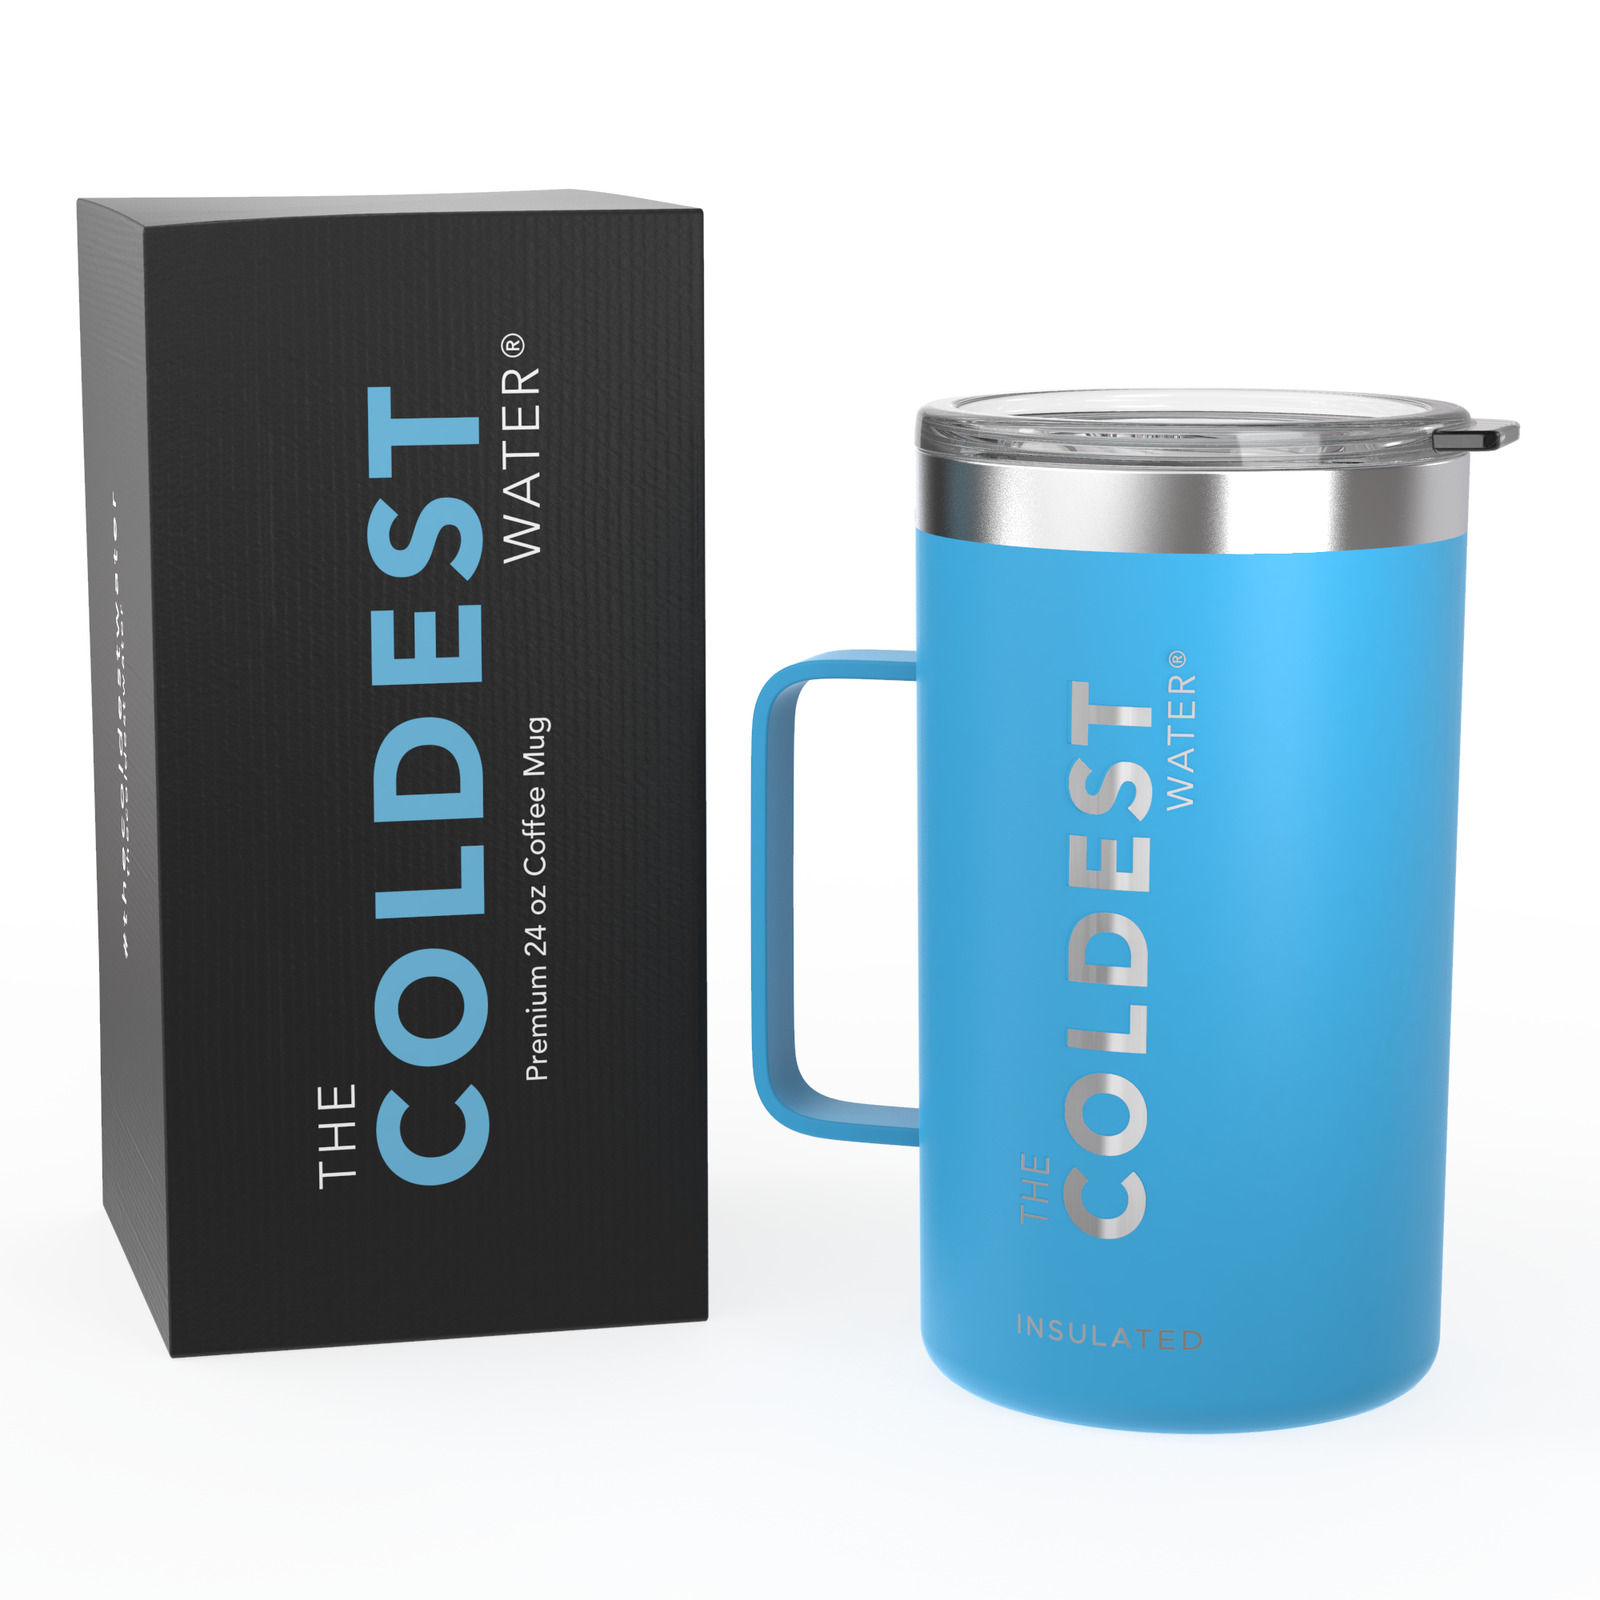 The Coldest Coffee Mug - Super Insulated Travel Mug for Hot & Cold Drinks 24 oz